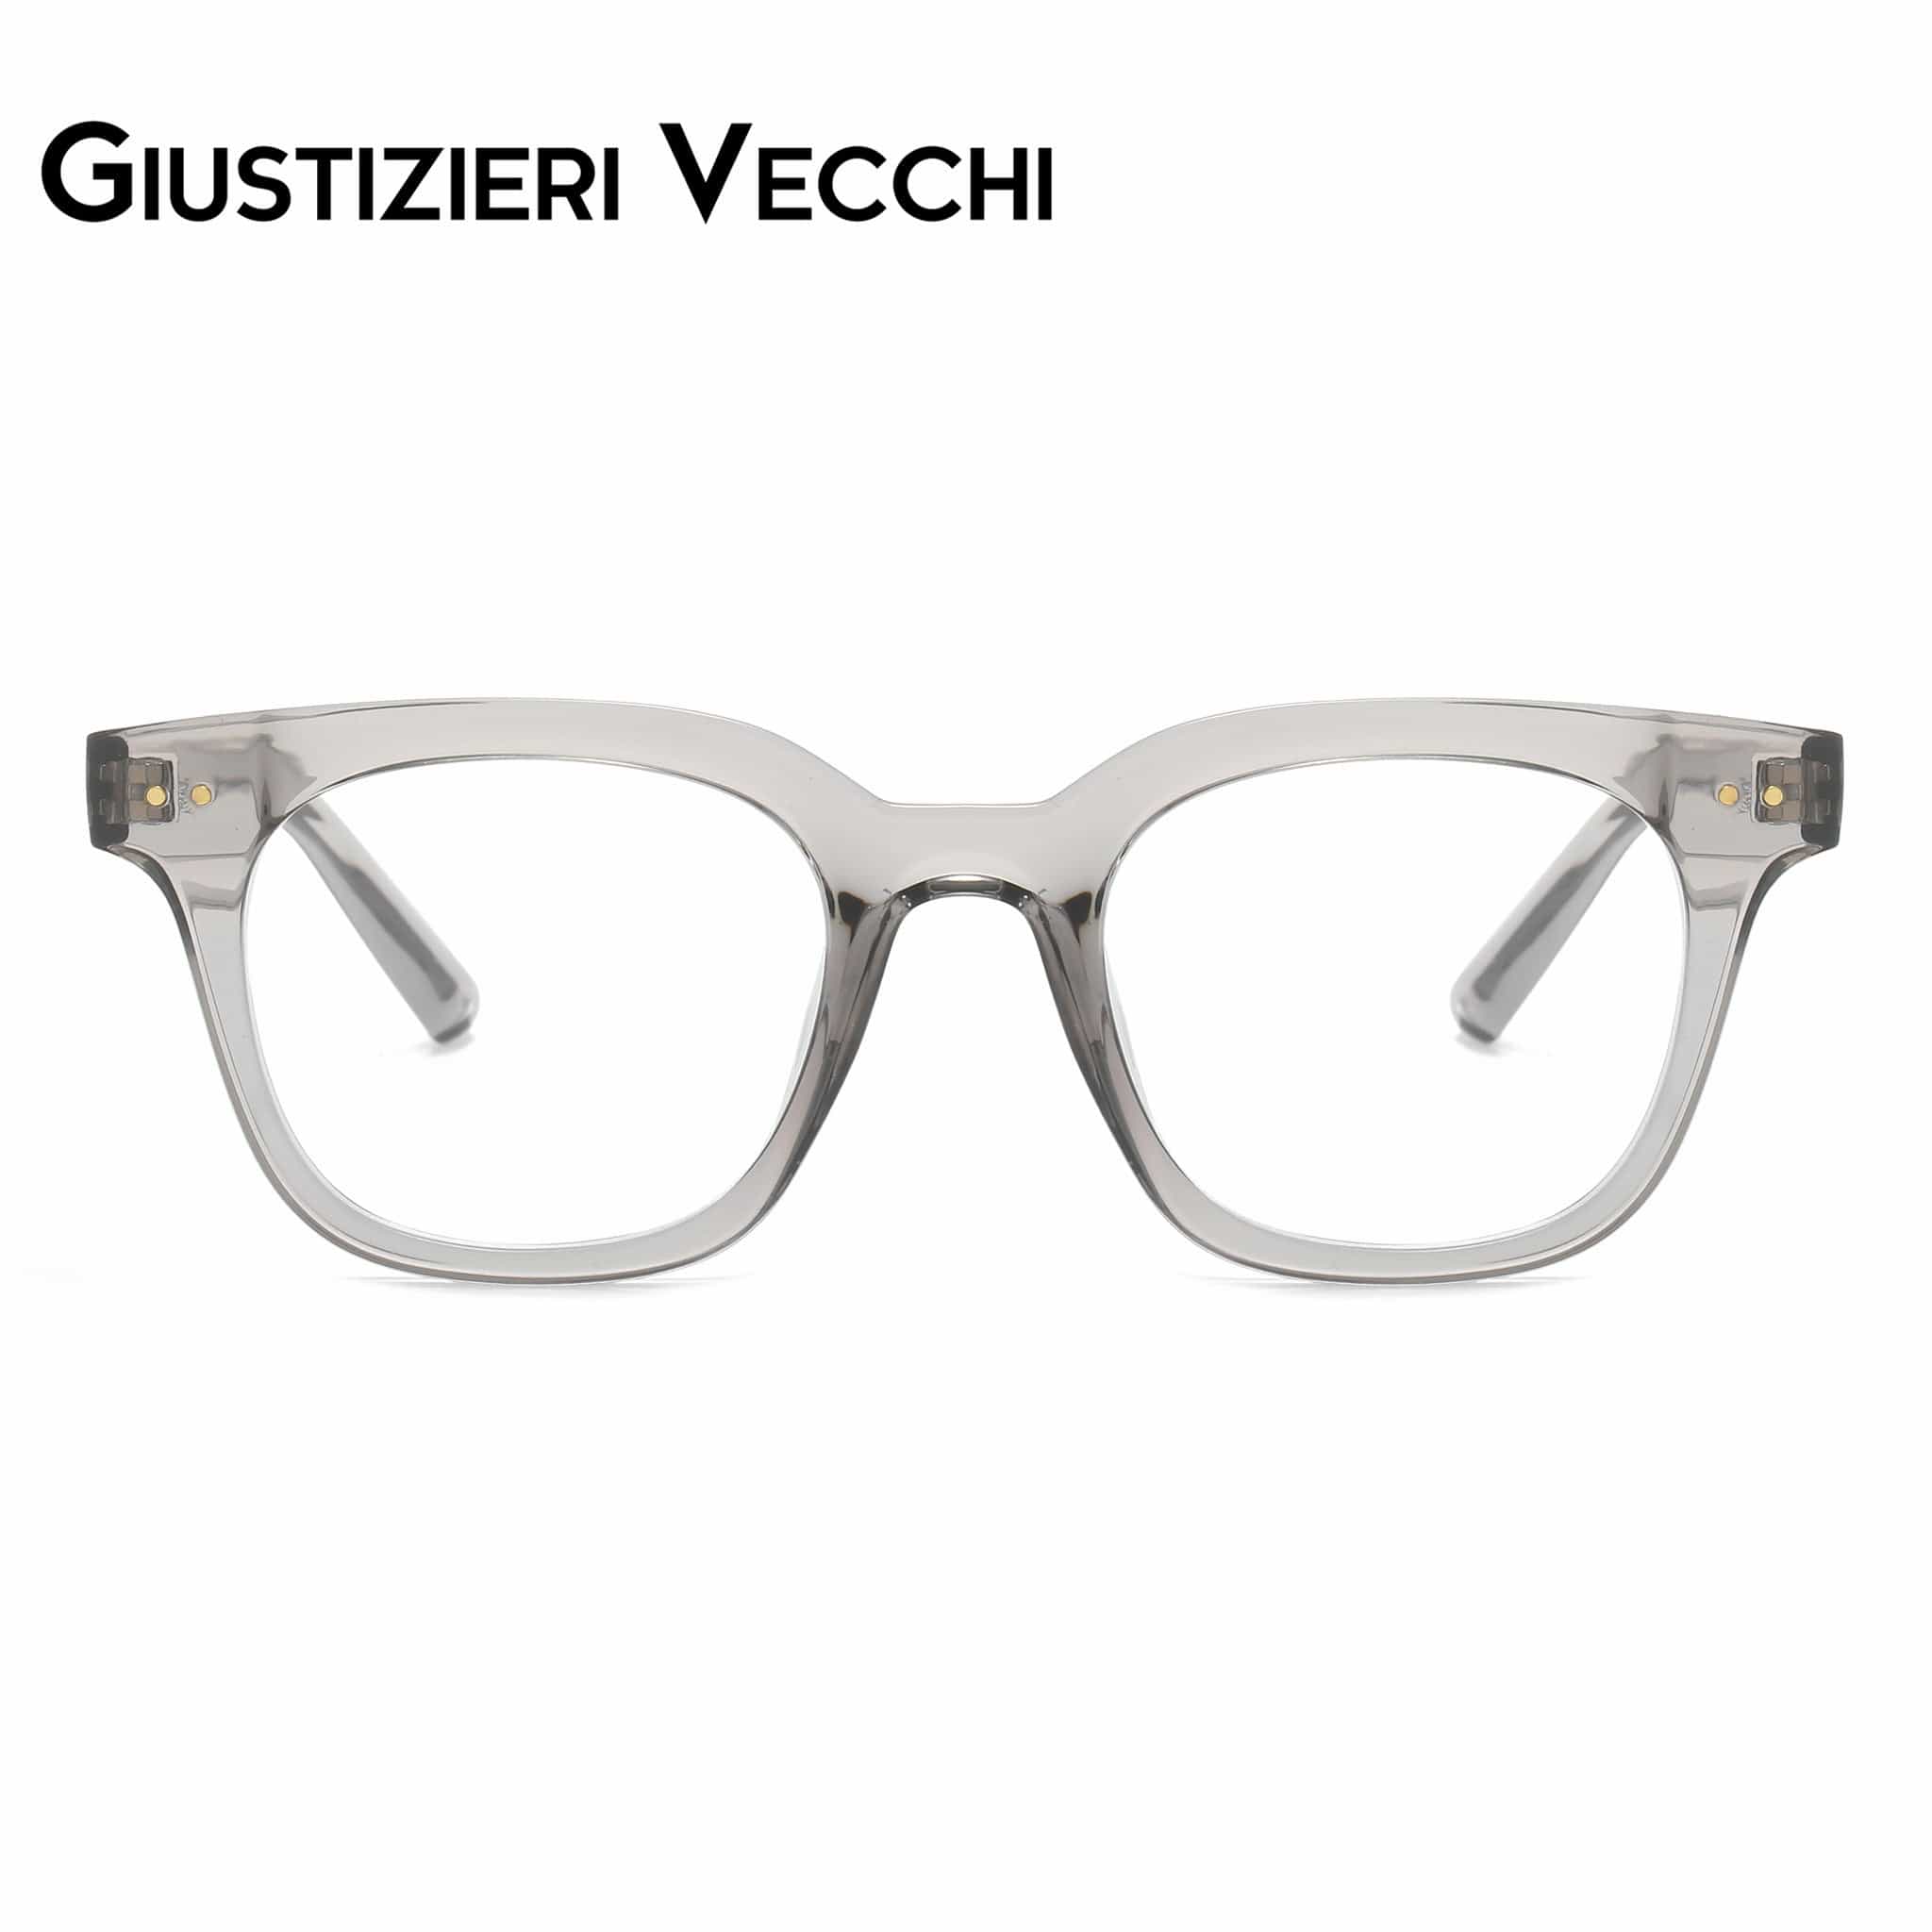 GIUSTIZIERI VECCHI Eyeglasses Small / Sea Glass Grey Phantom Duo